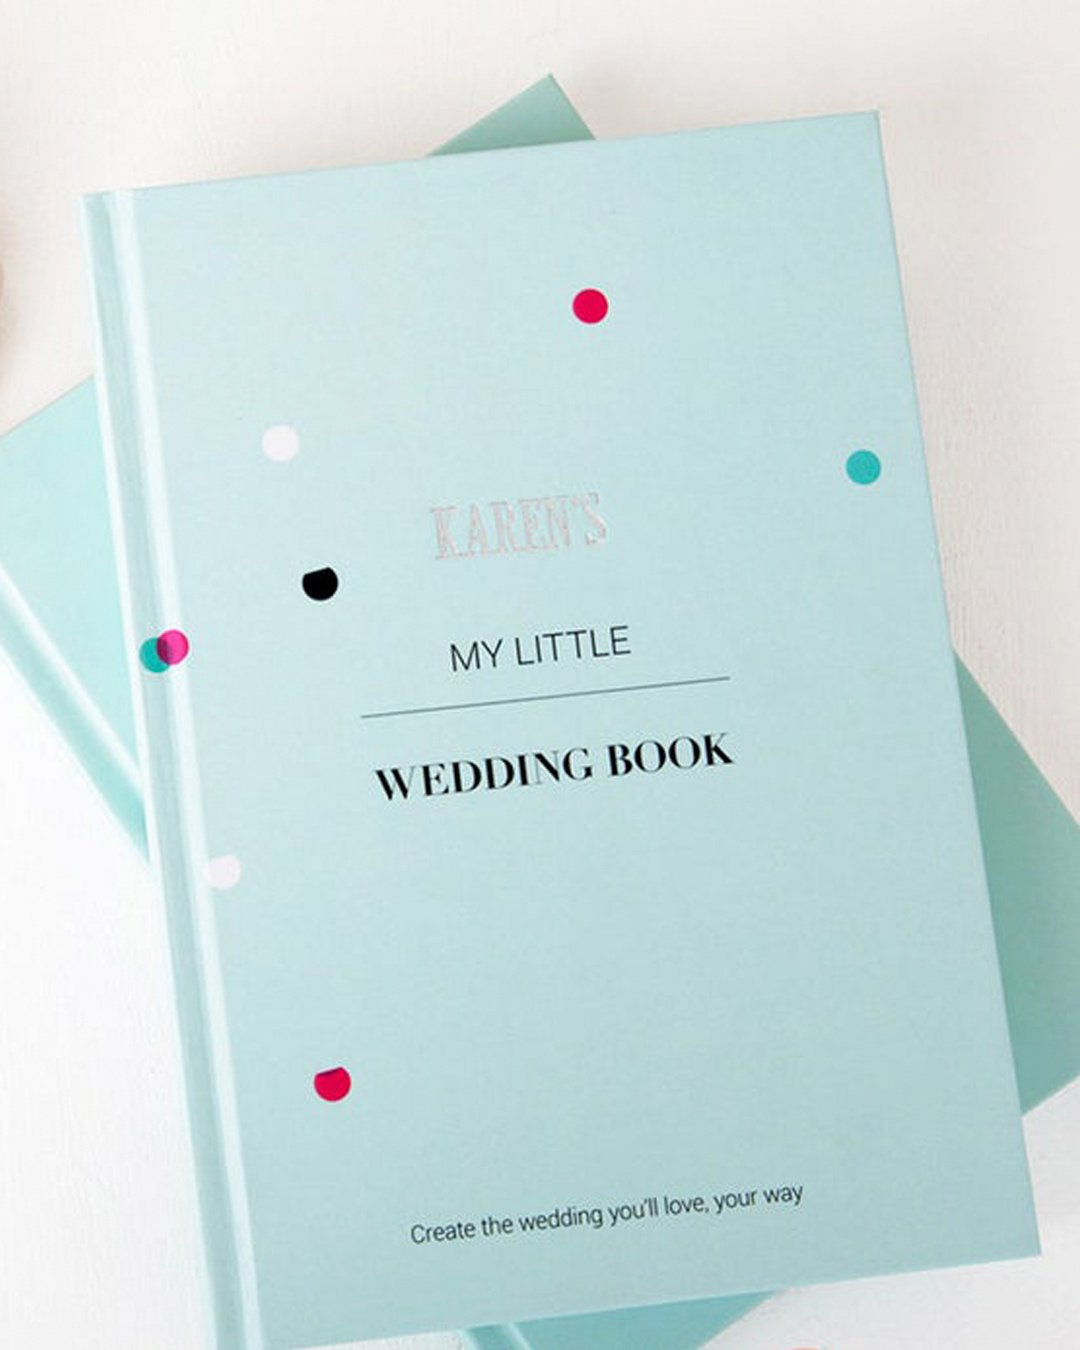 wedding planner book karens little book